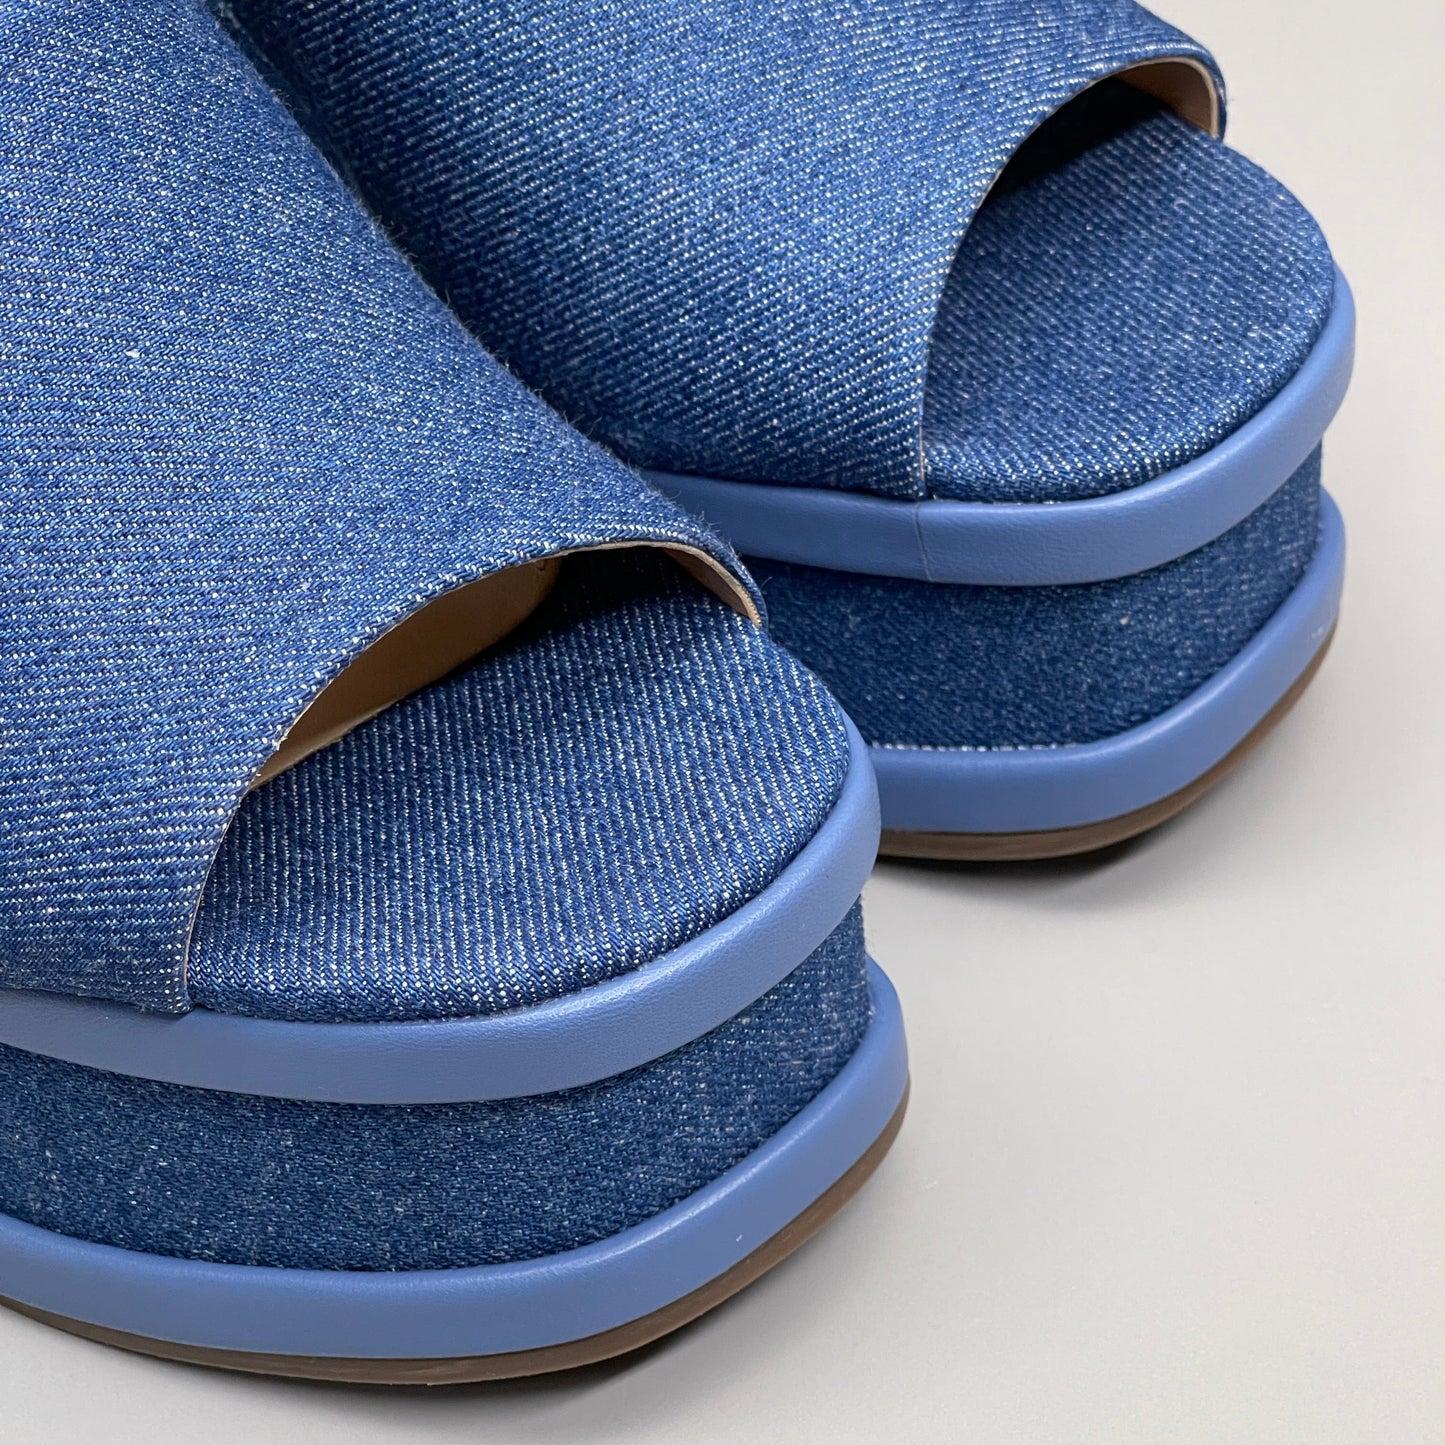 SCHUTZ Dalle Denim Women's Wedge Sandal Blue Platform Shoe Sz 7.5B (New)